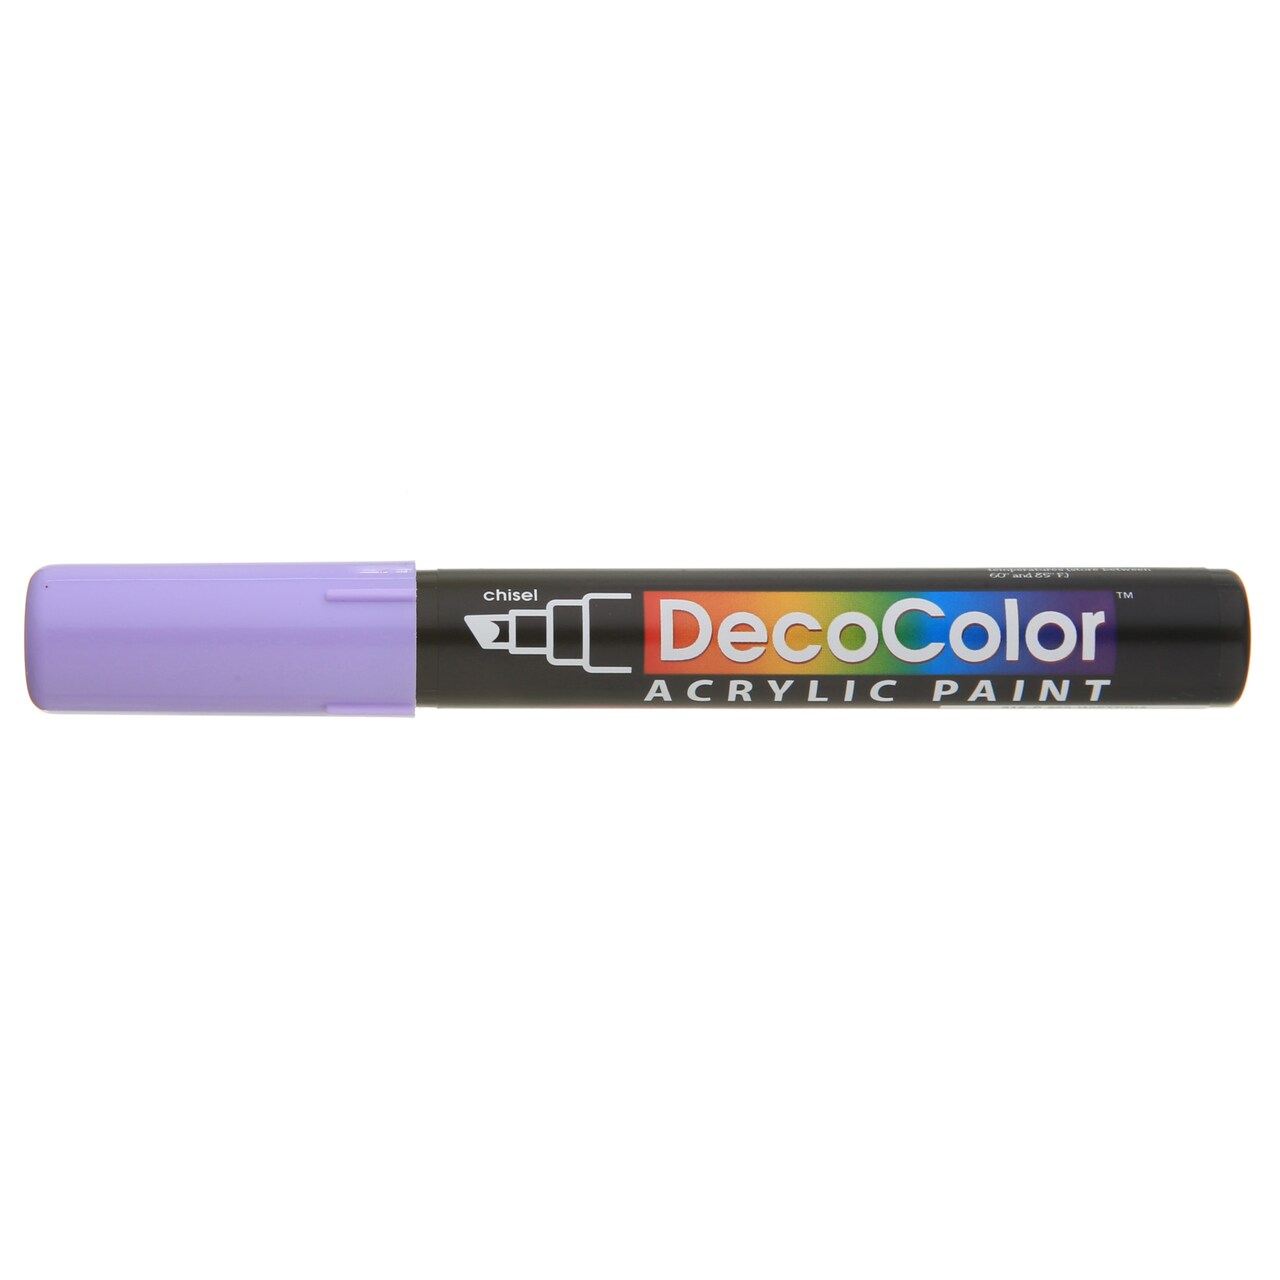 Uchida Decocolor Acrylic Paint Marker, Chisel, Wisteria